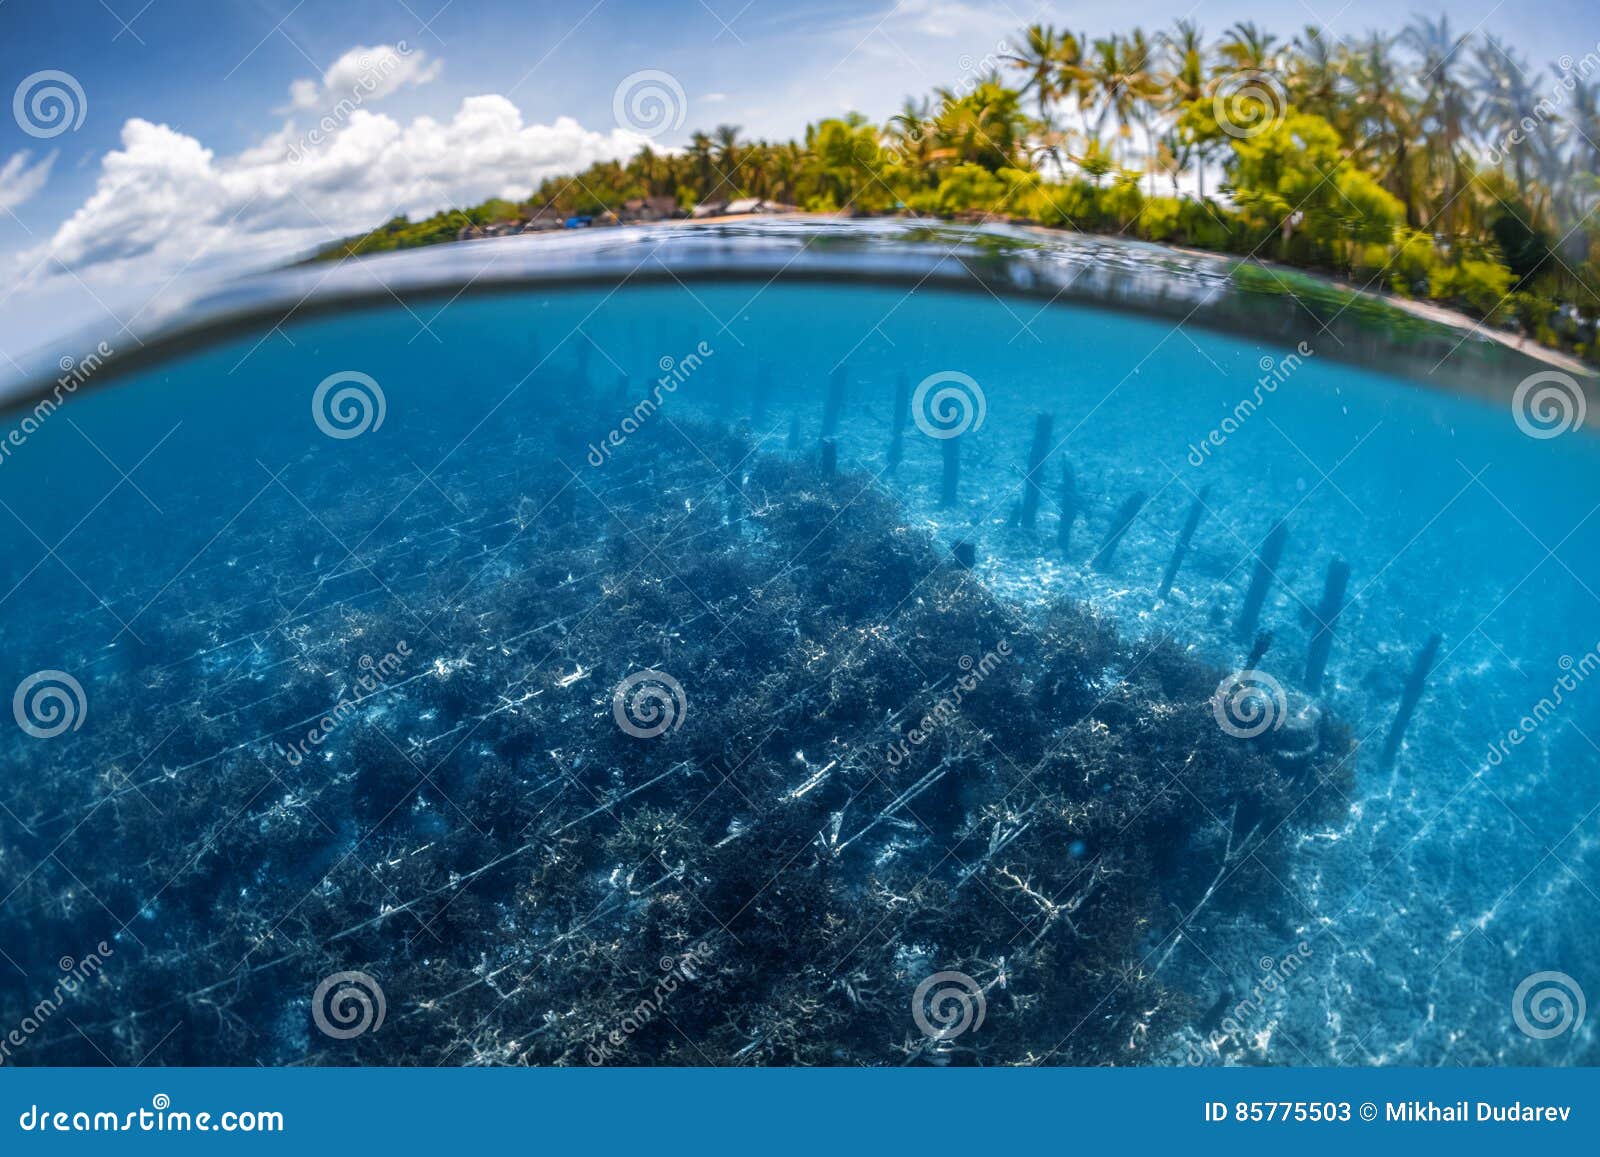 Underwater Split Shot of the Sea Weed Garden Stock Image - Image of blue,  bottom: 85775503